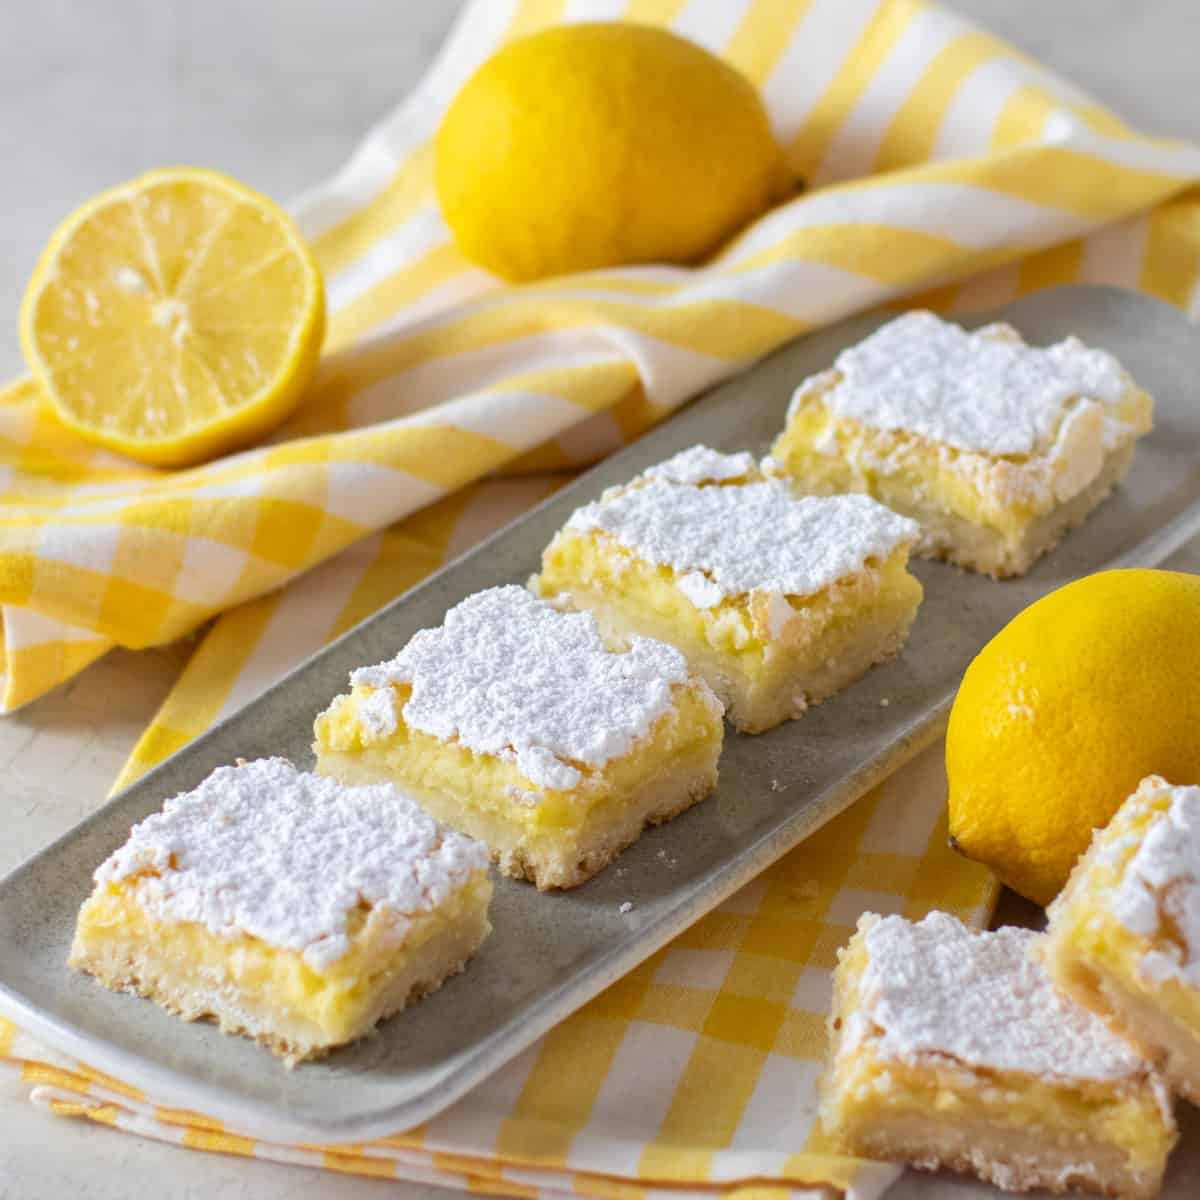 Lemon bars on a serving tray.